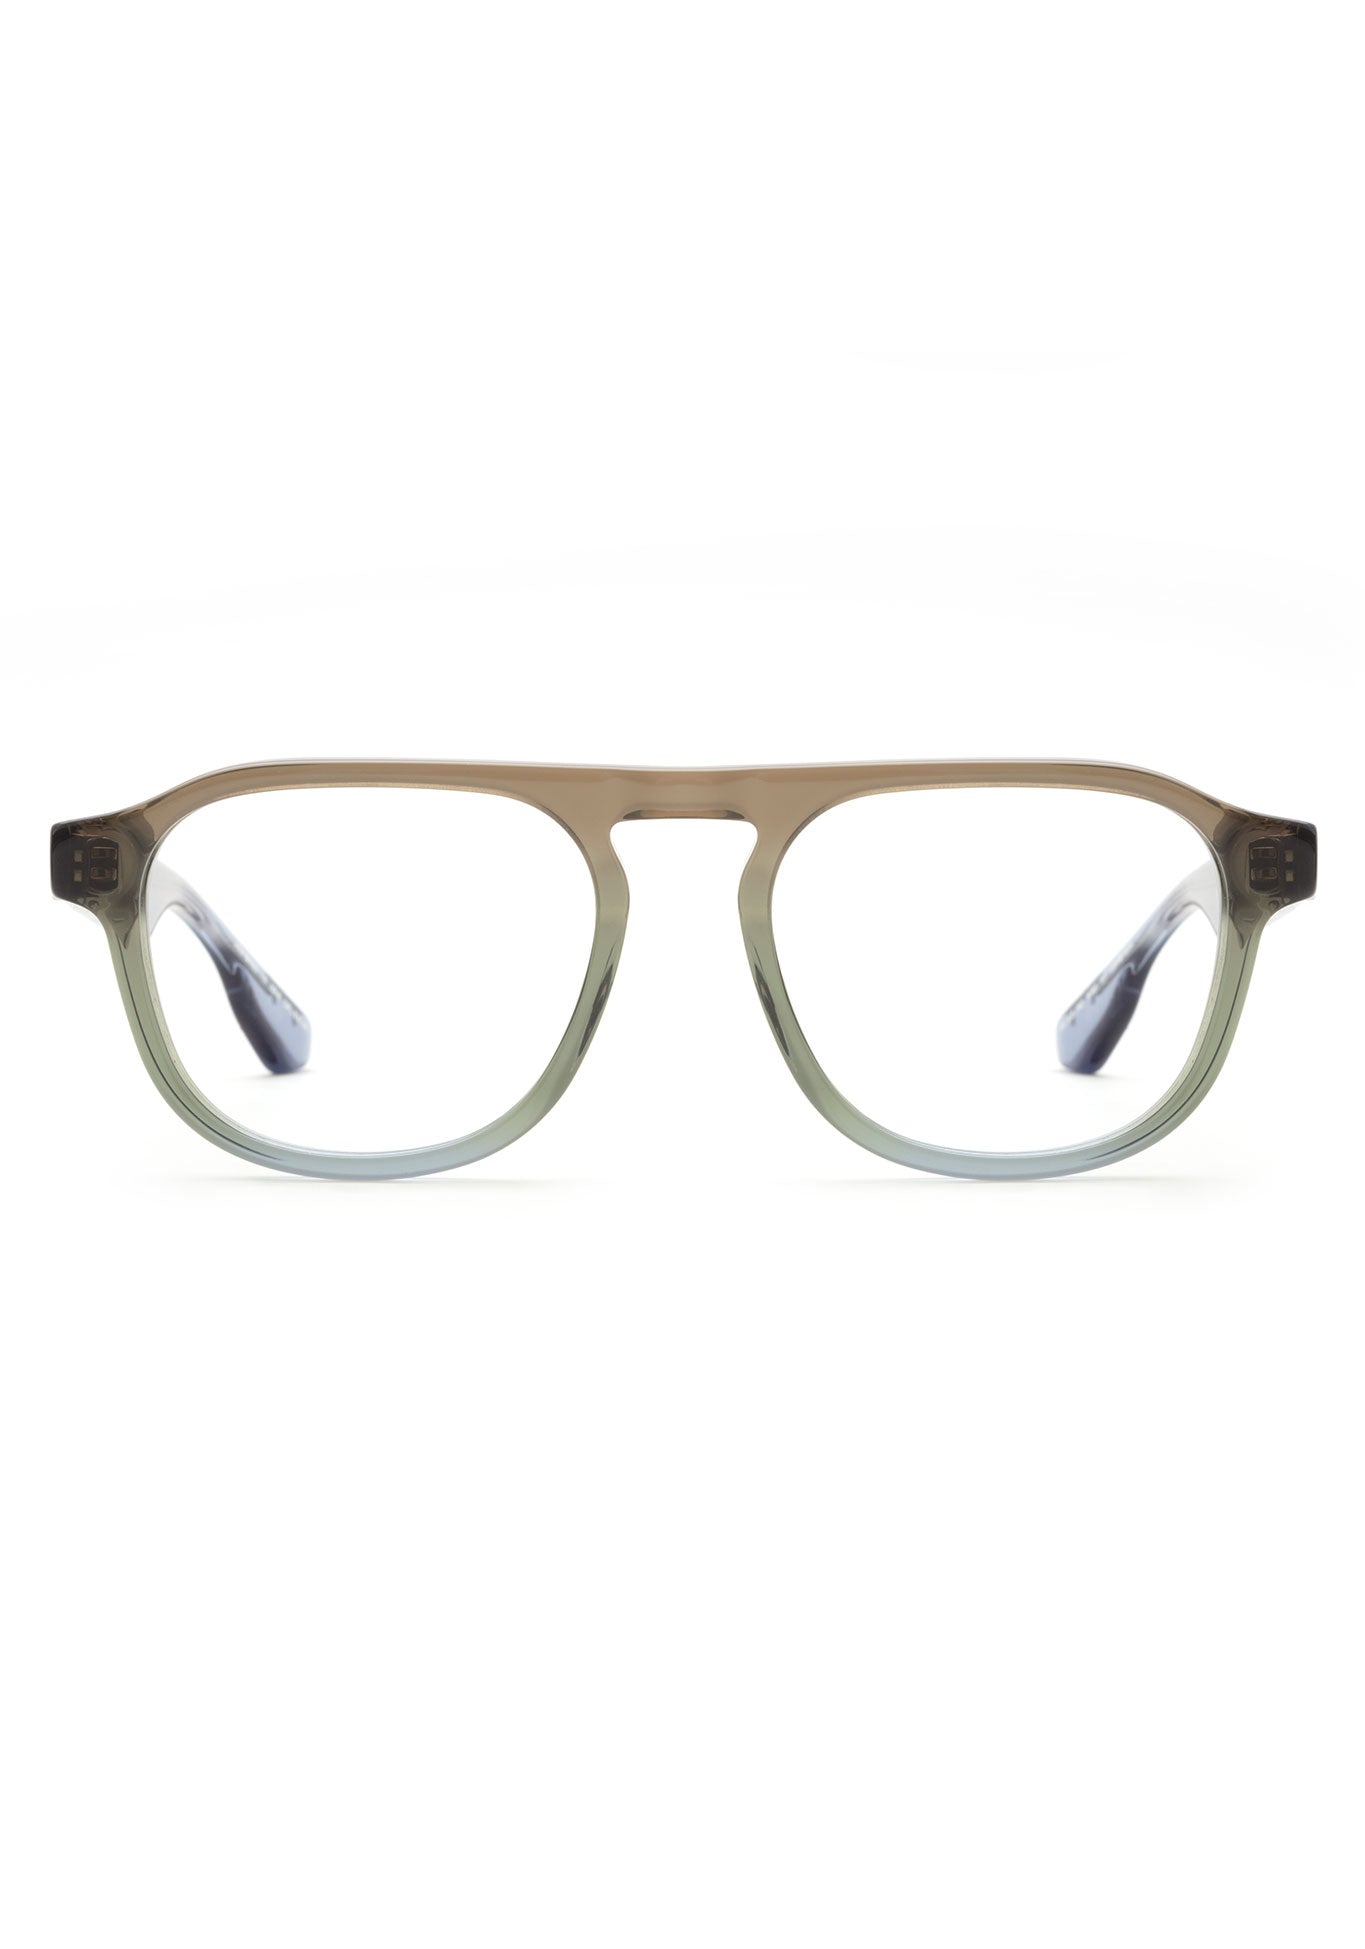 KREWE CALVIN | Matcha Handcrafted, luxury blue and green acetate eyeglasses